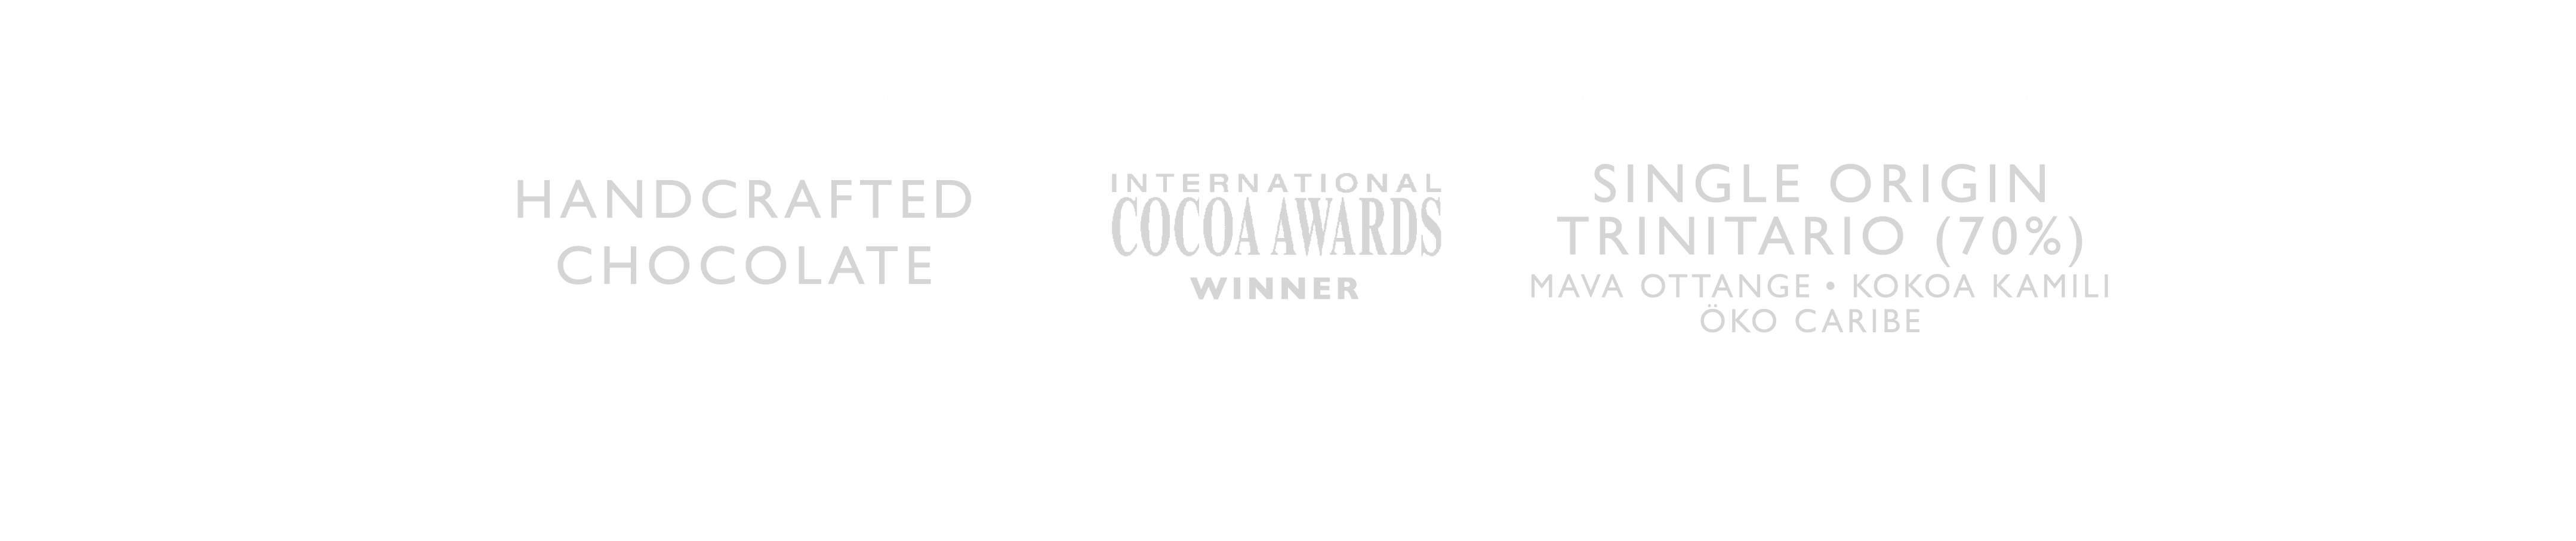 Handcrafted Chocolate – International Cocoa Awards Winner – Single Origin